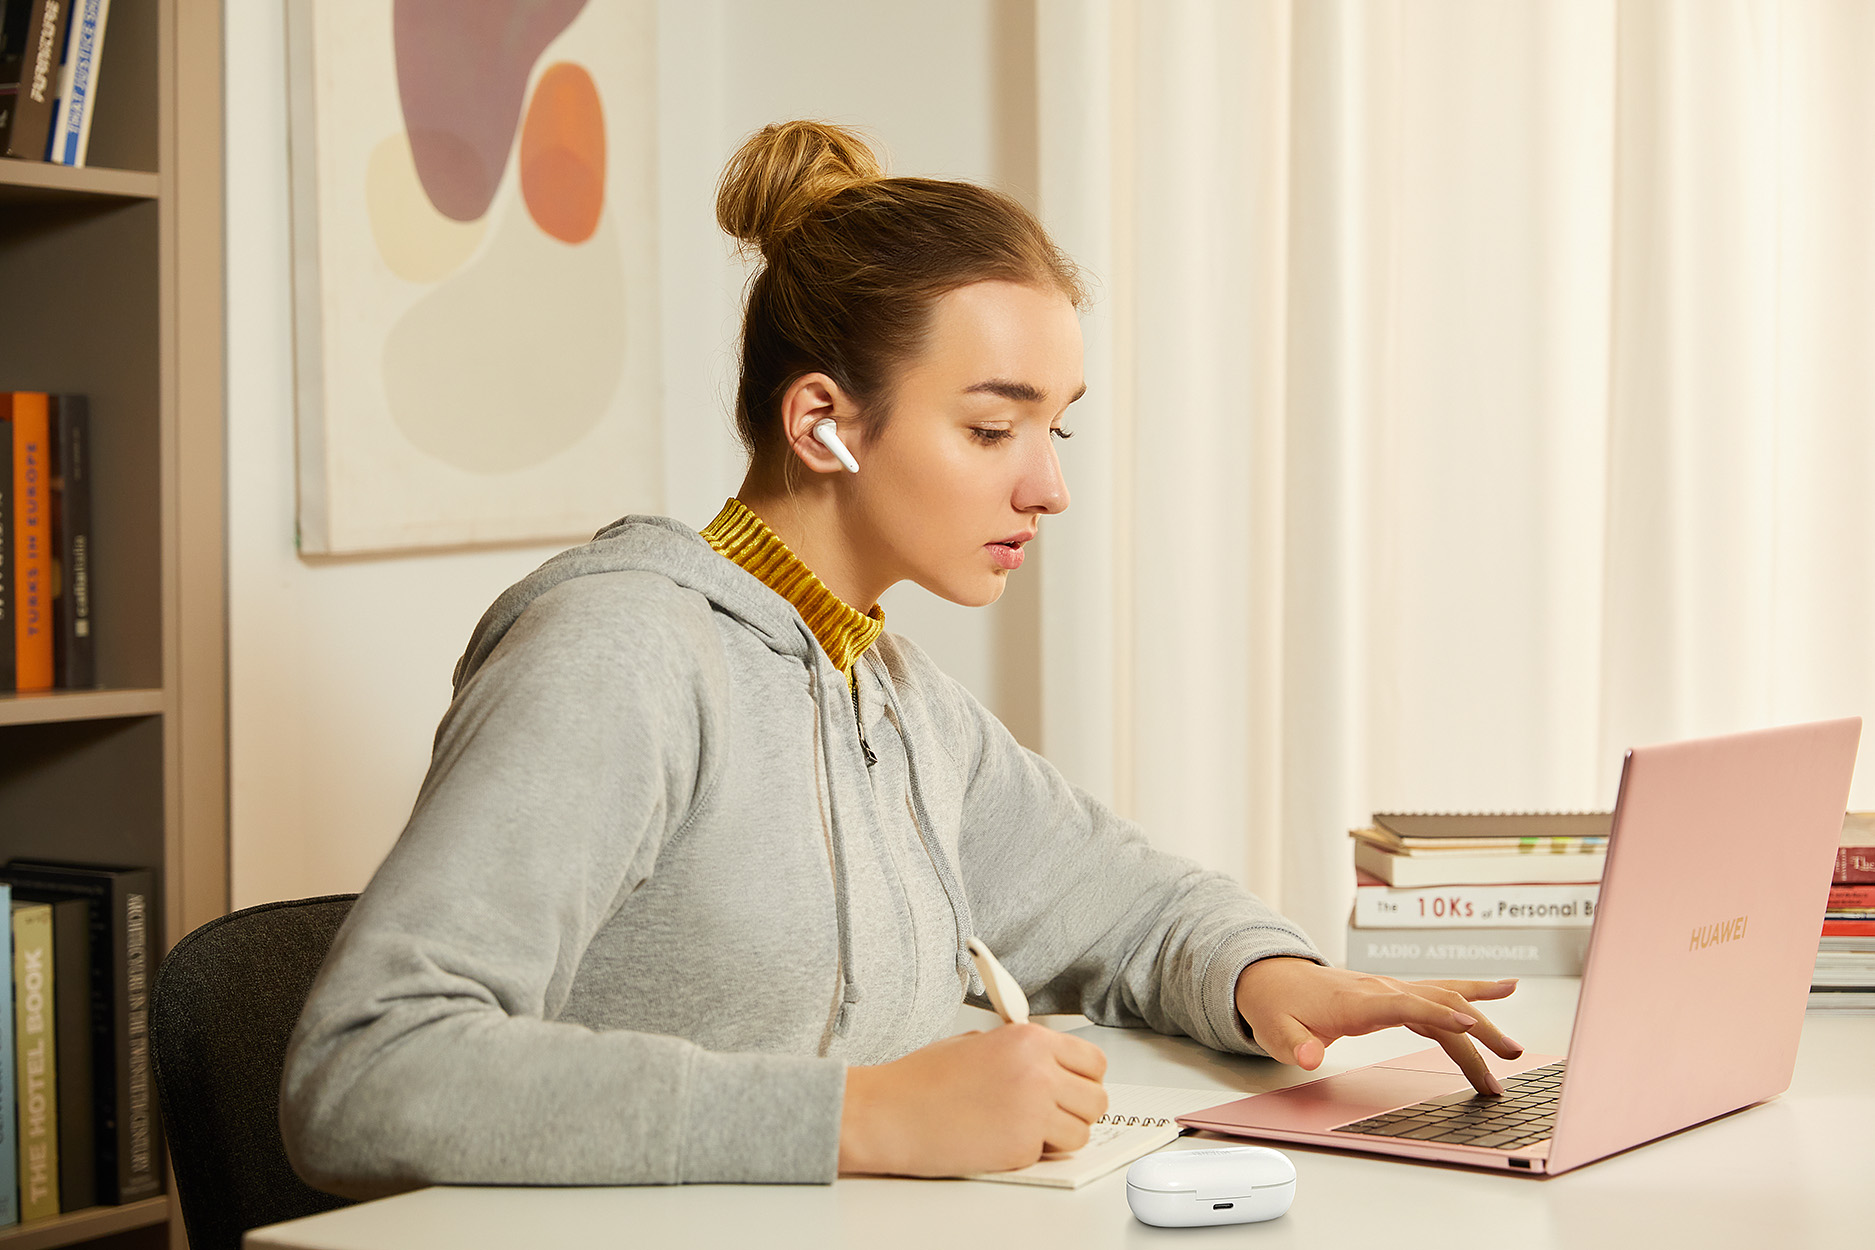 In-ear SE, FreeBuds Kopfhörer HUAWEI Bluetooth weiß